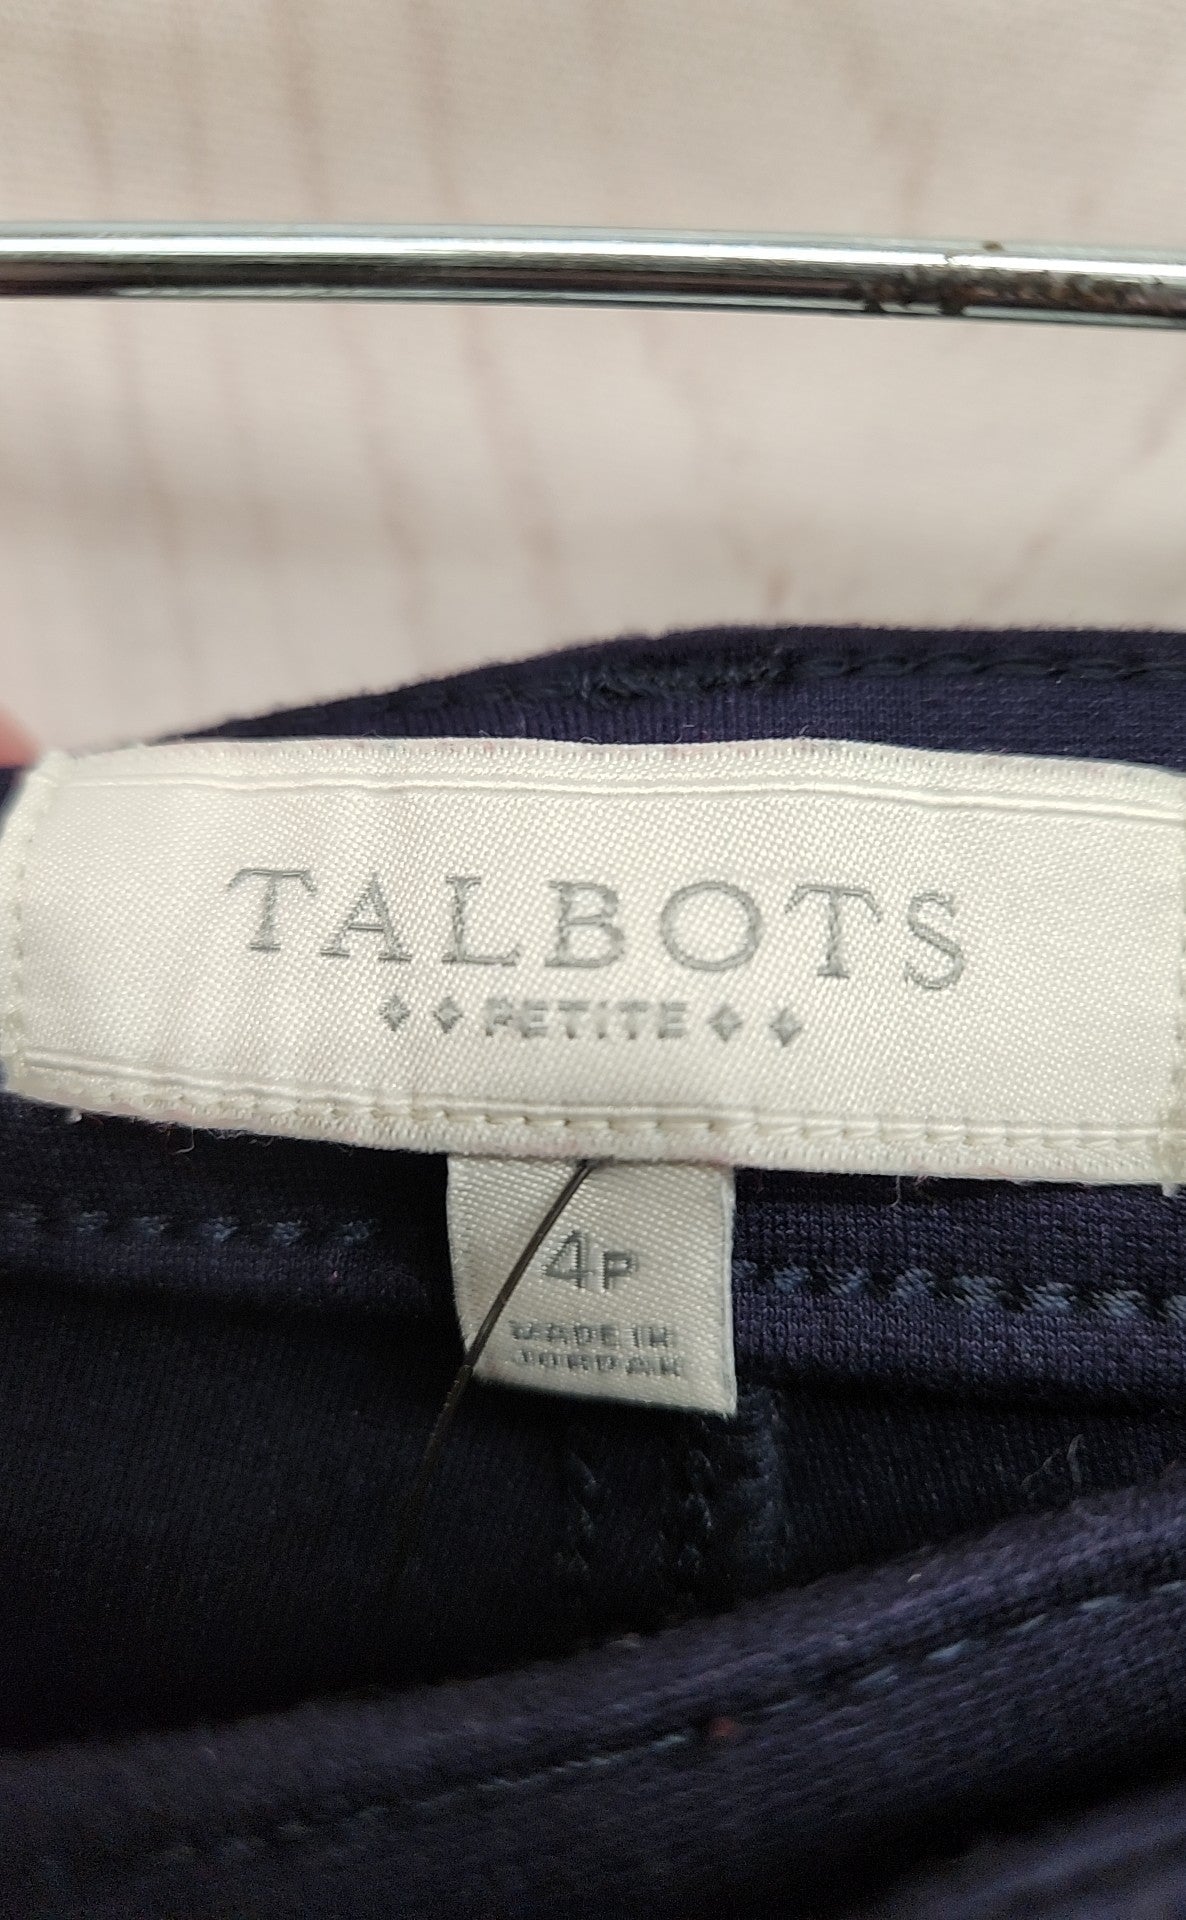 Talbots Women's Size 4 Petite Navy Pants